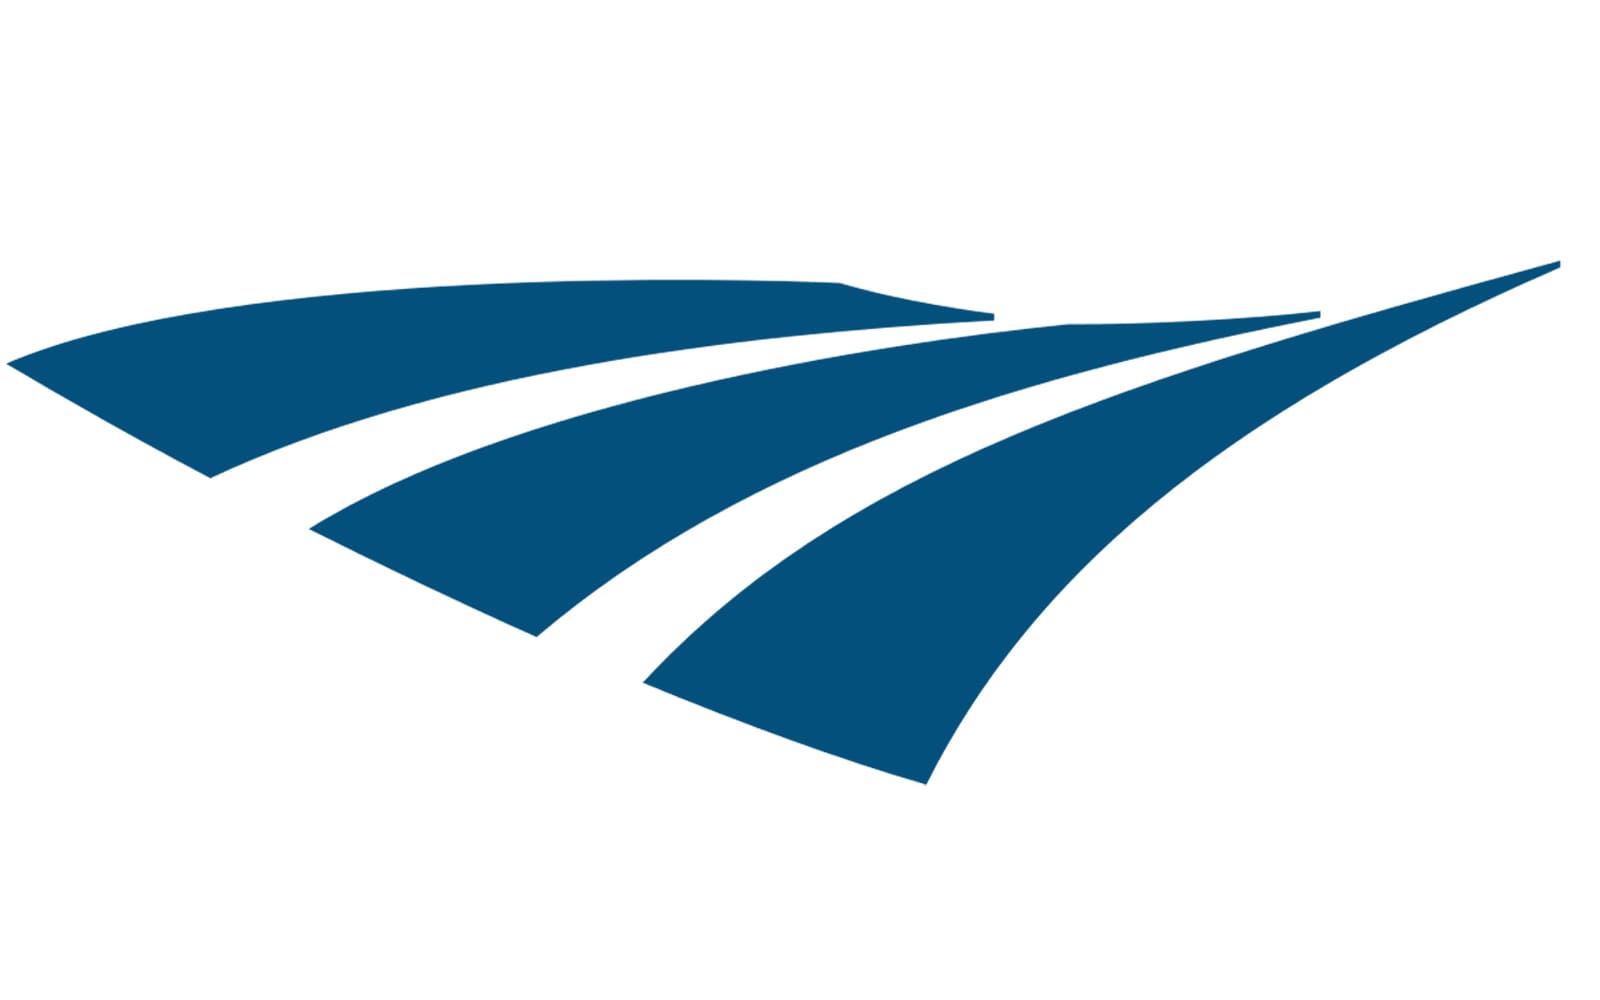 amtrak travel mark logo